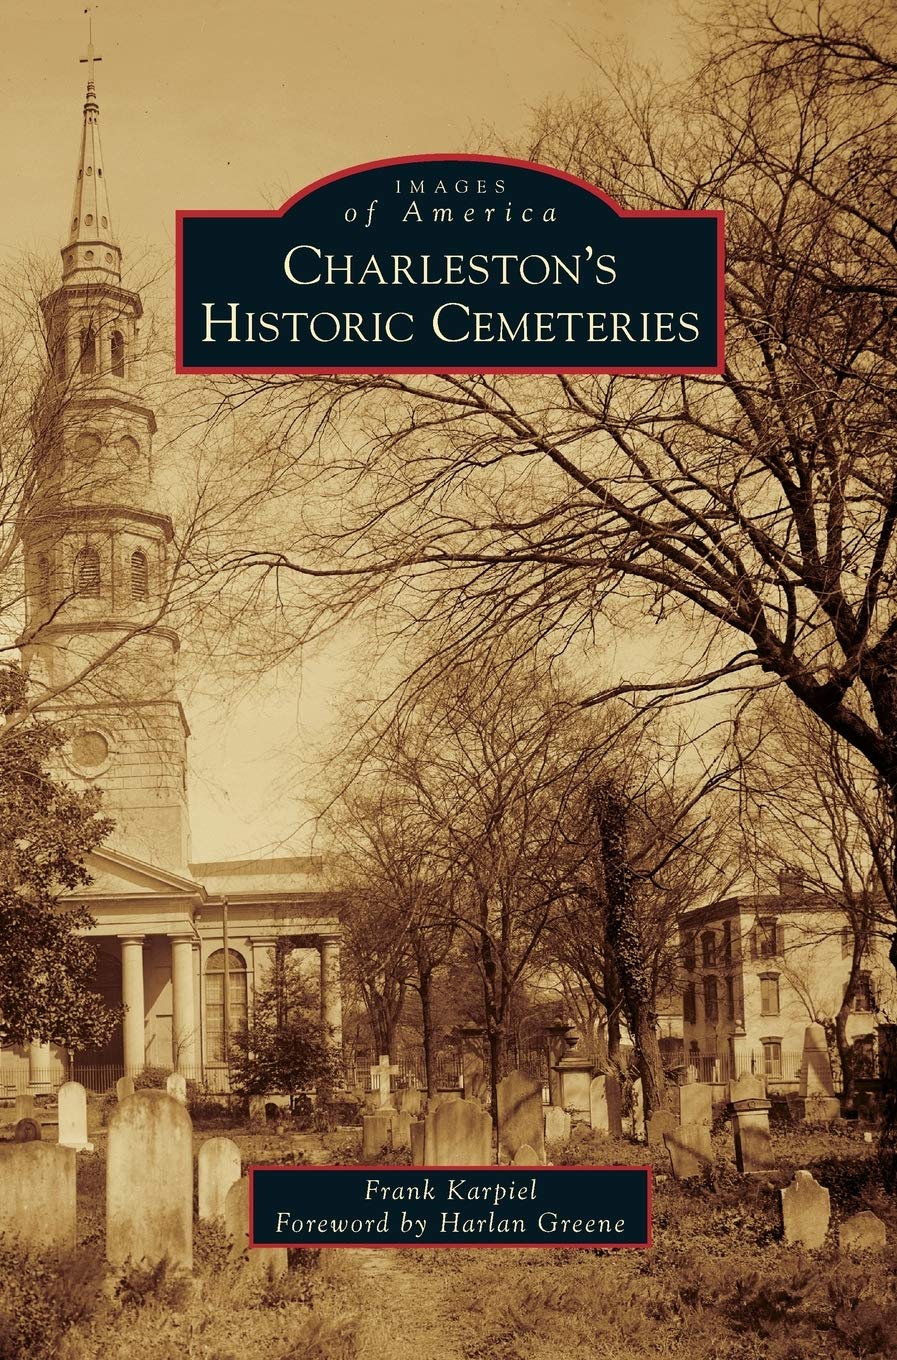 Charleston's Historic Cemetaries ~ Frank Karpiel w/ forward by Harlan Greene